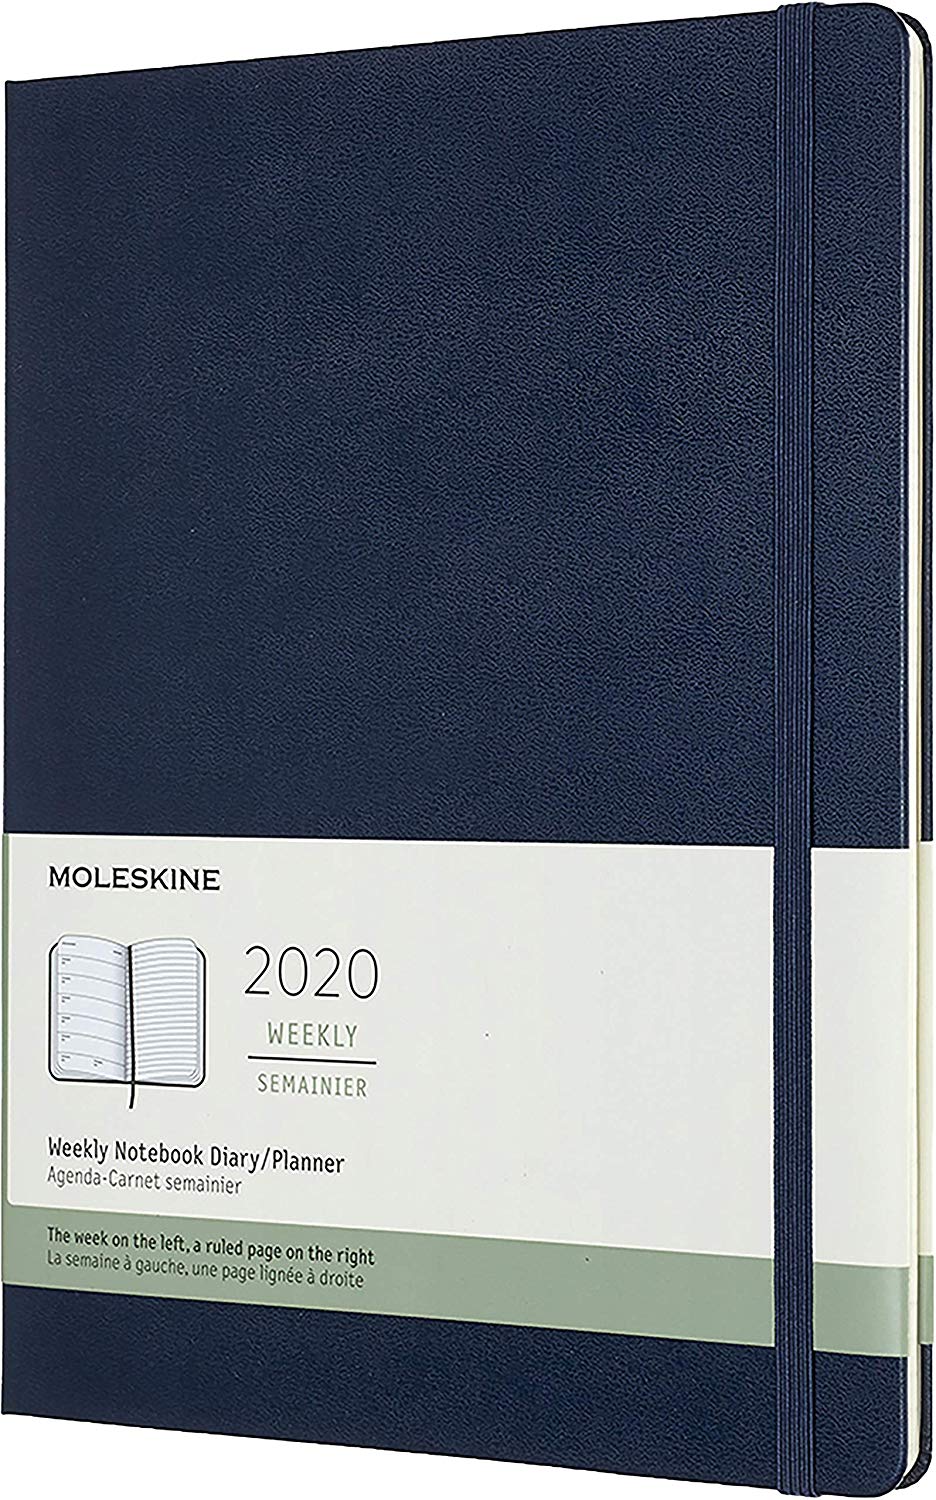 Agenda 2020 - Moleskine 12-Month Weekly Notebook Planner - Sapphire Blue, Extra Large, Hard cover | Moleskine